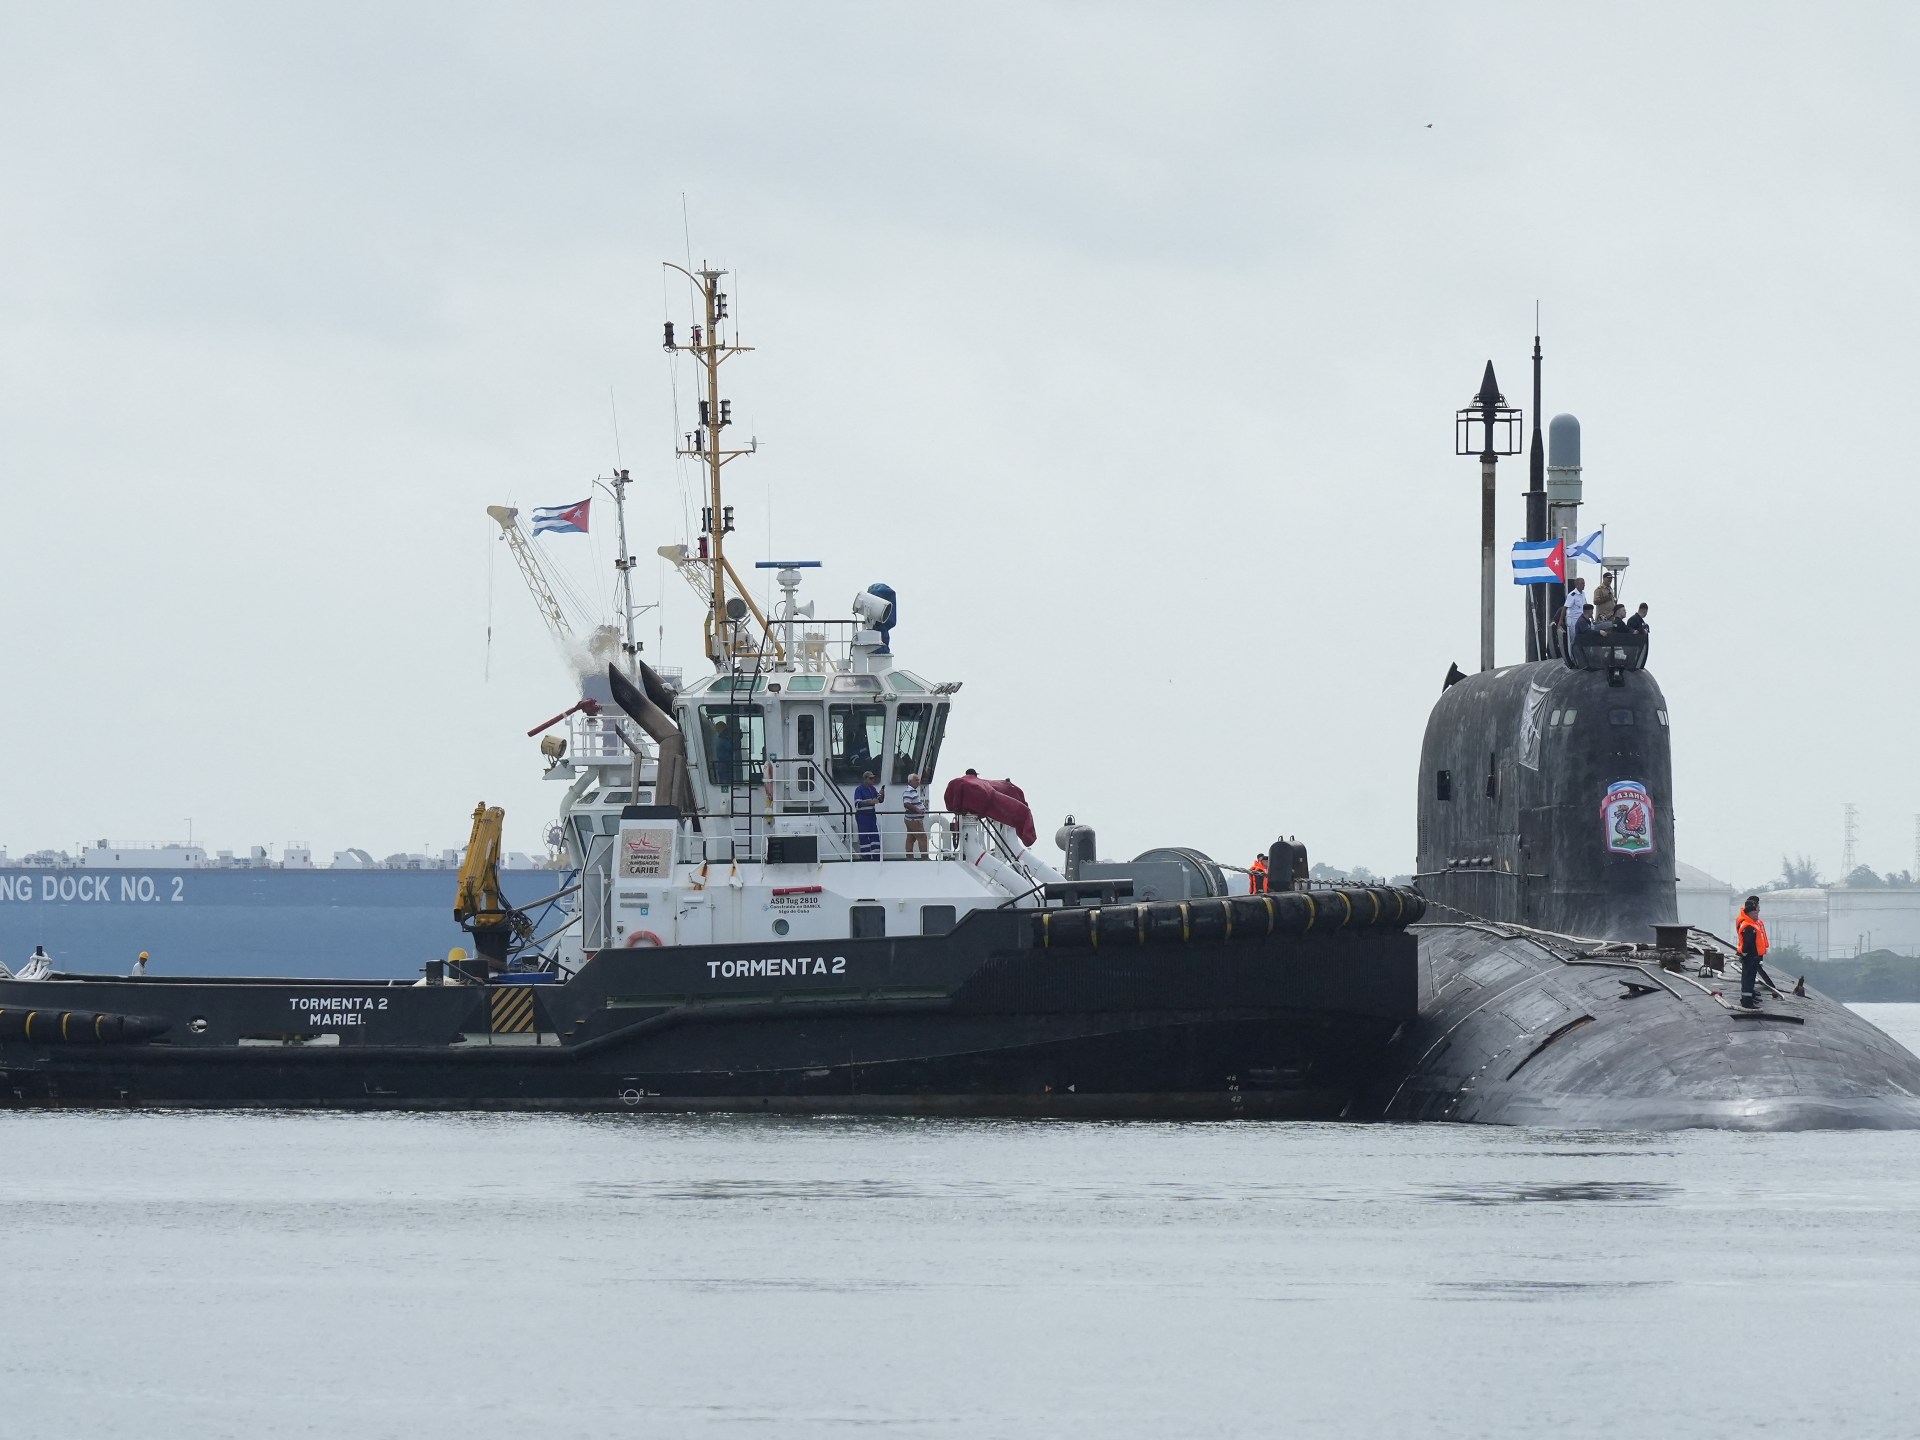 Video shows Russian nuclear submarine sailing into Havana, Cuba